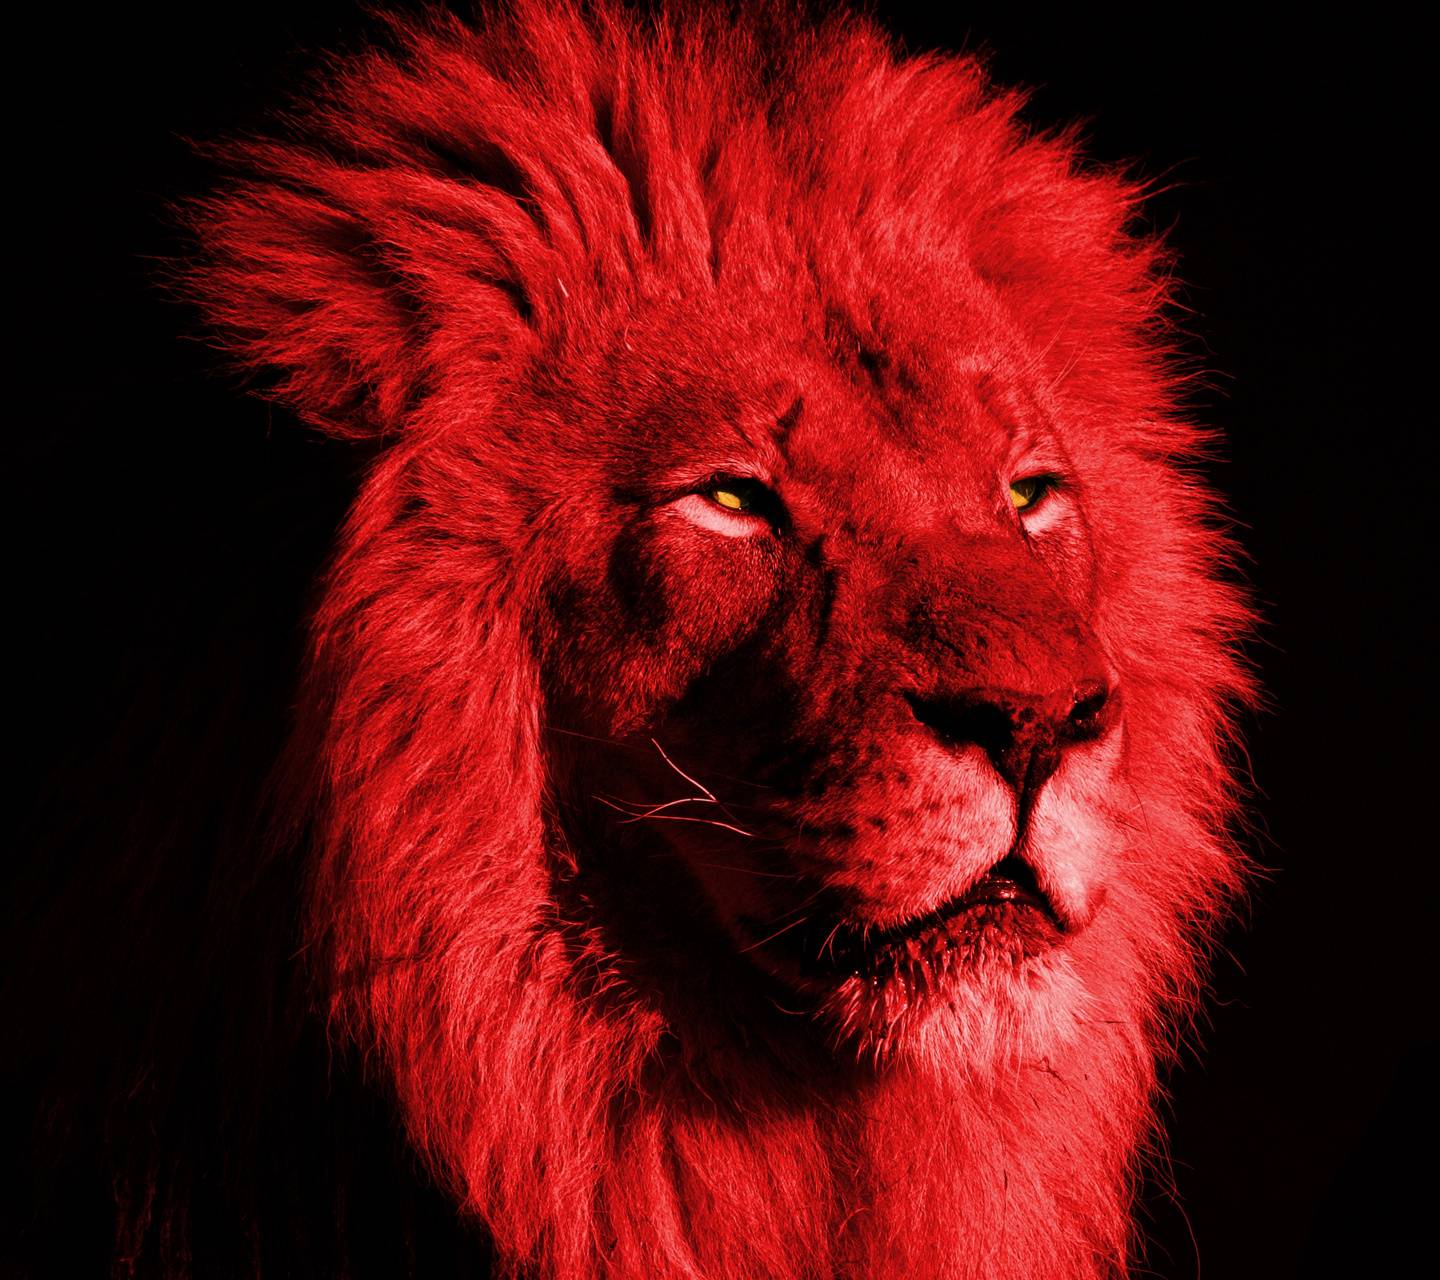 Red Lion wallpaper